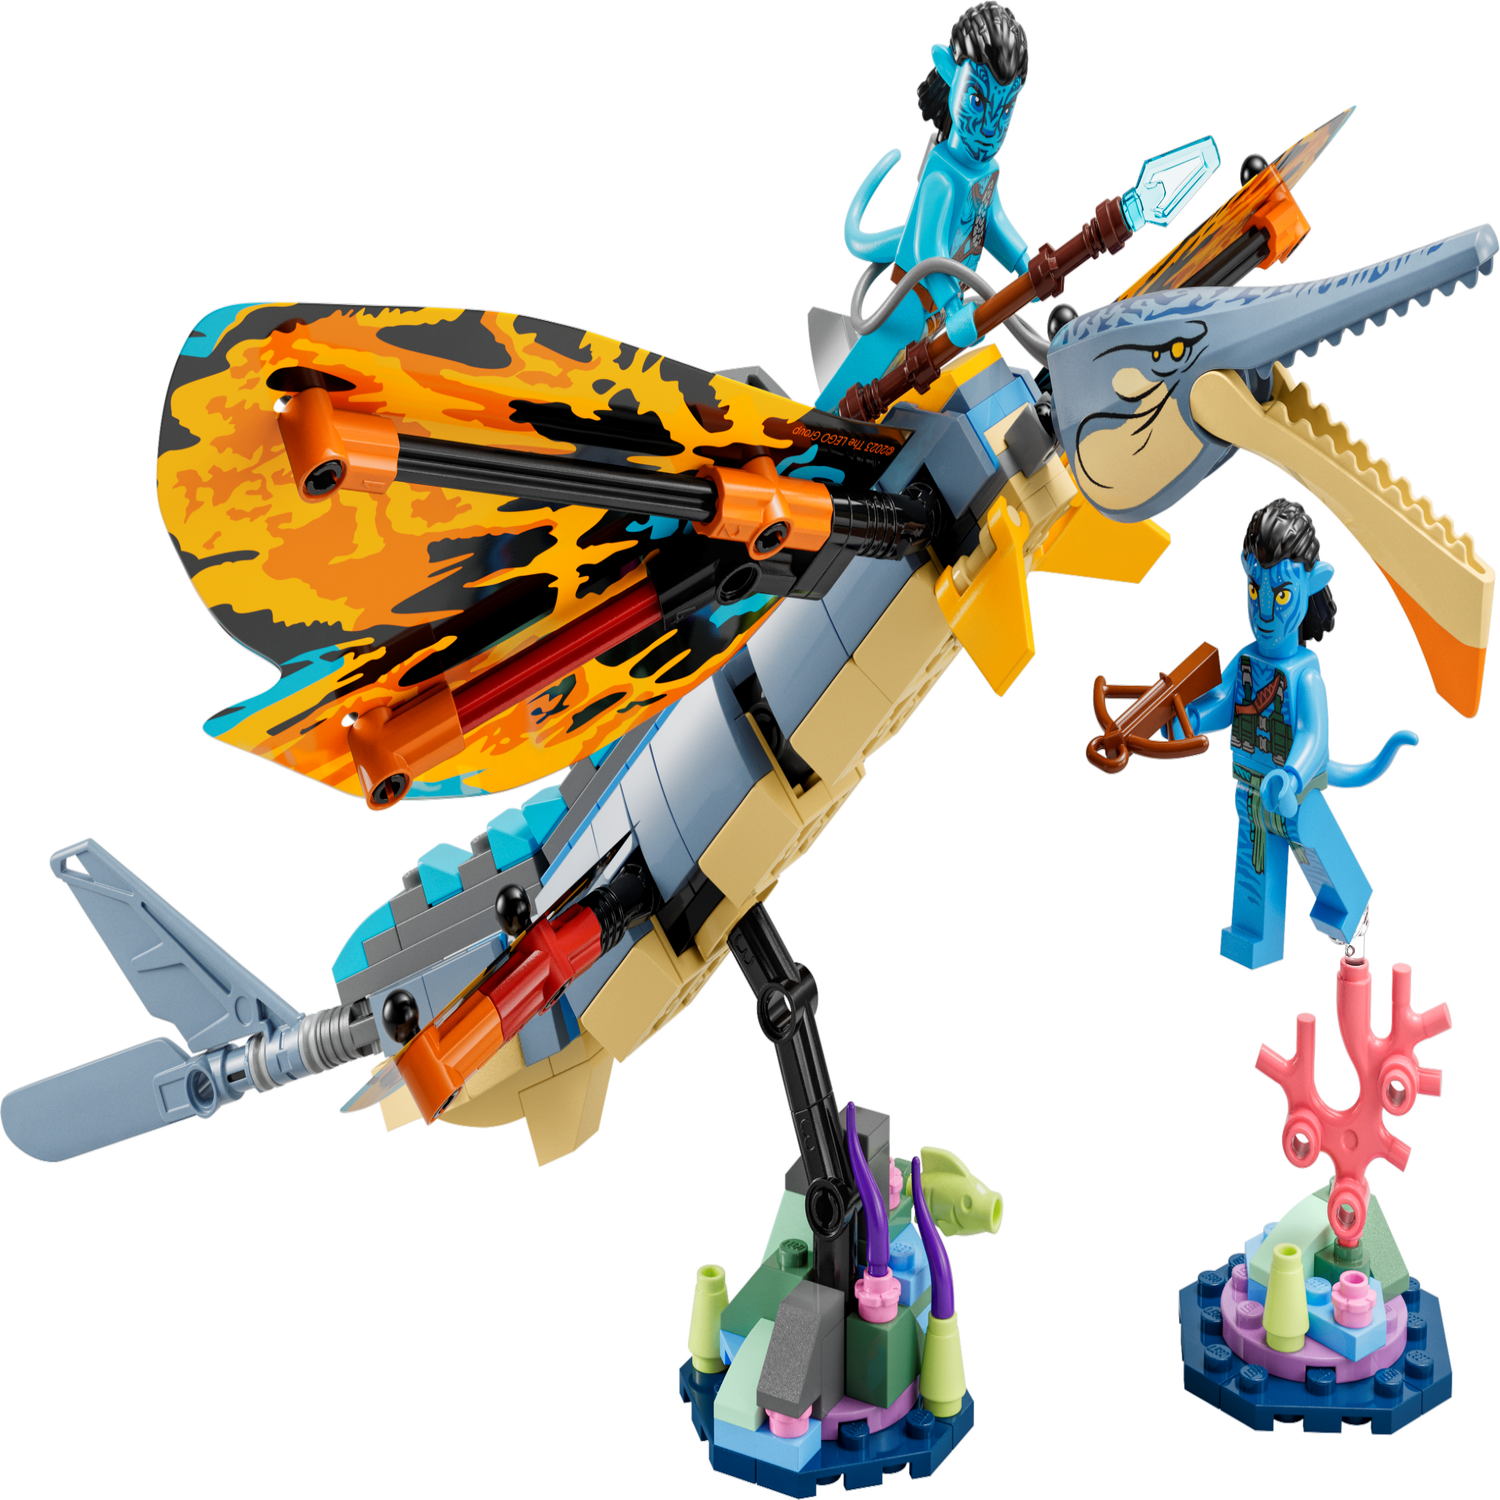 Buy 75576 LEGO® Avatar Skimwing adventure